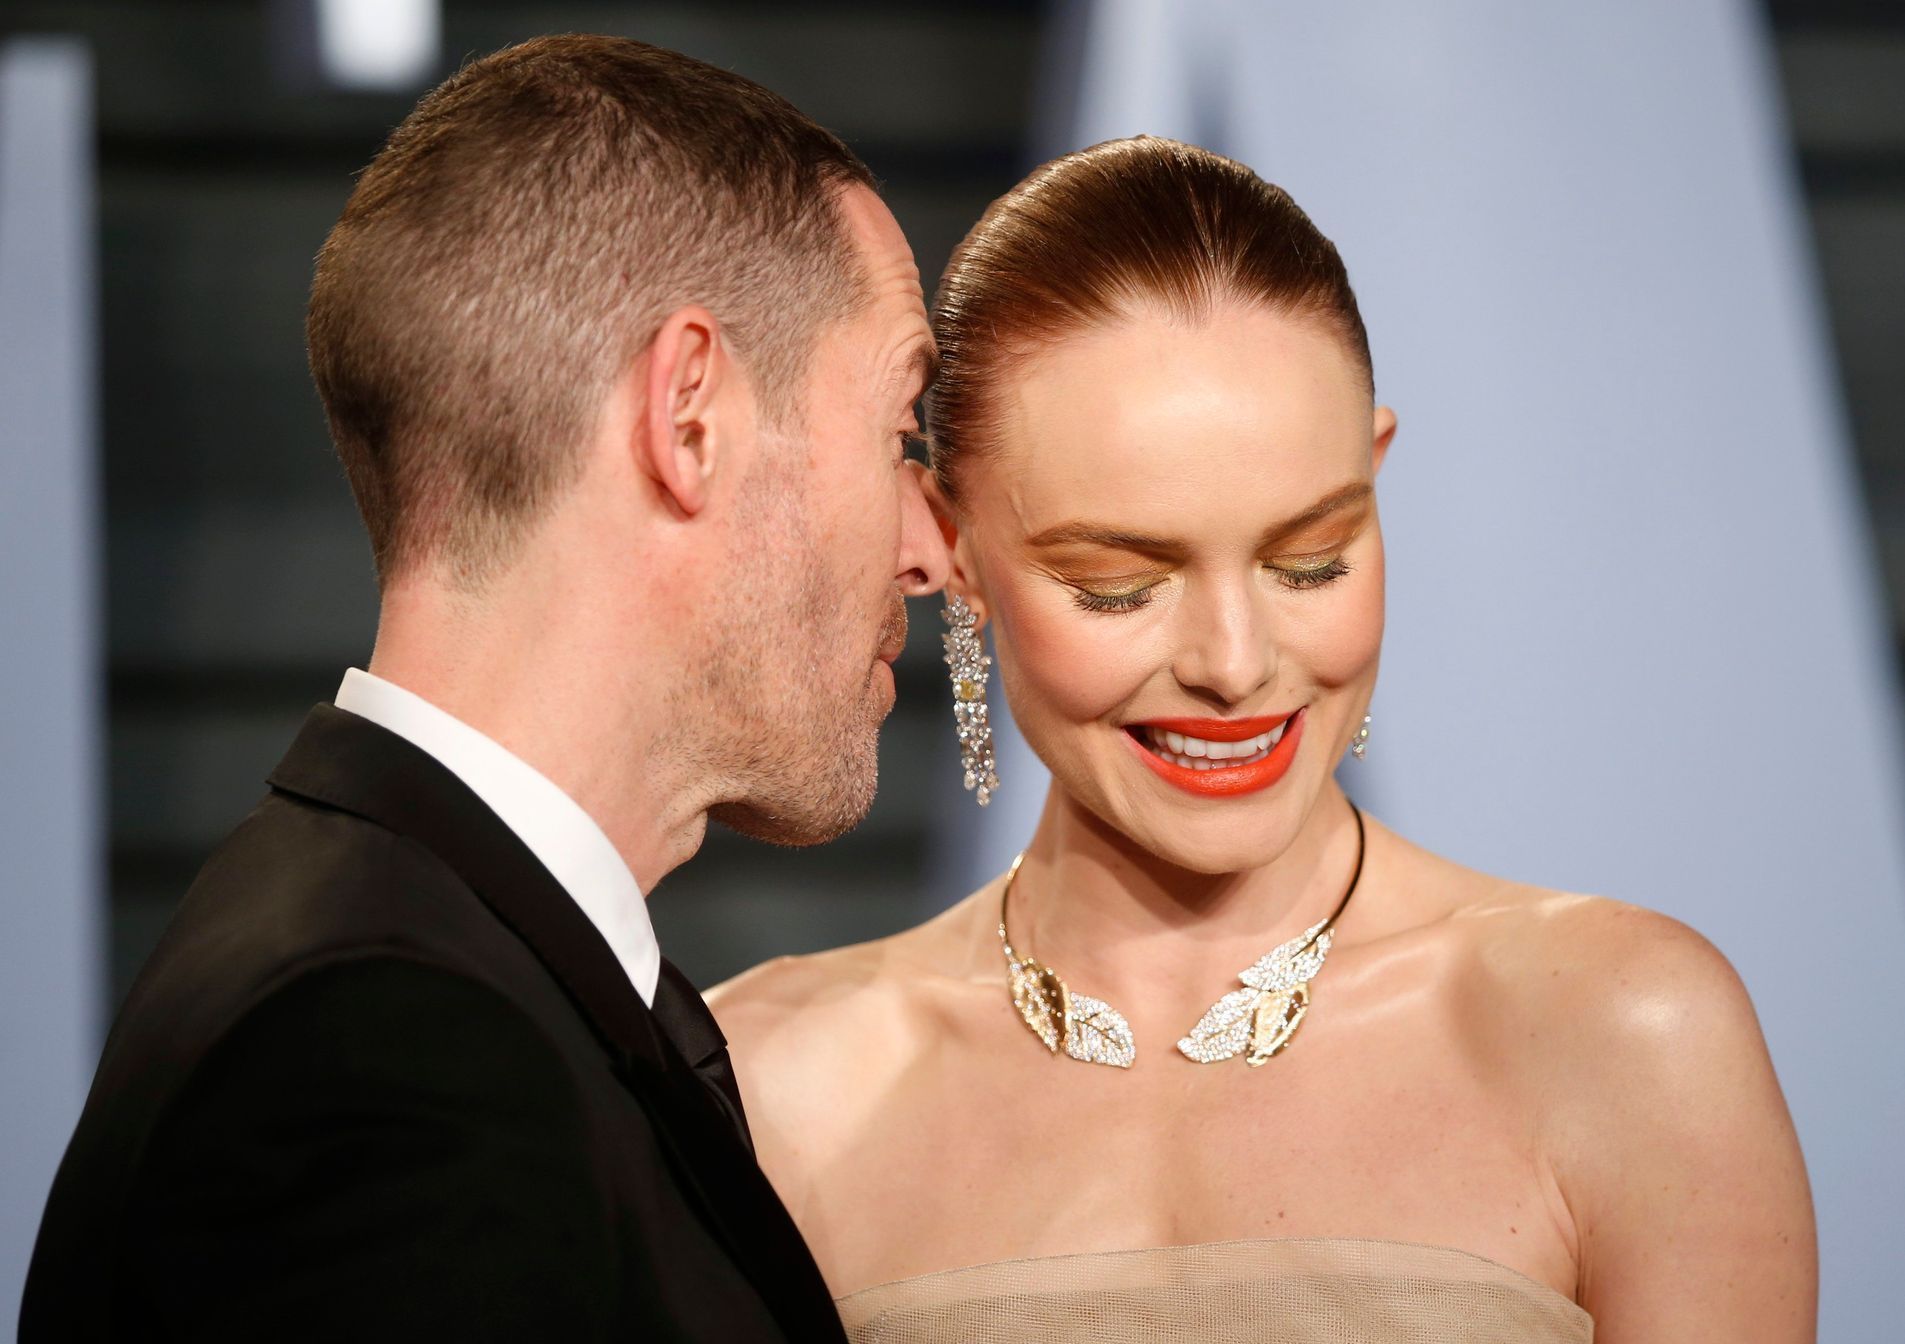 Kate Bosworth, Michael Polish